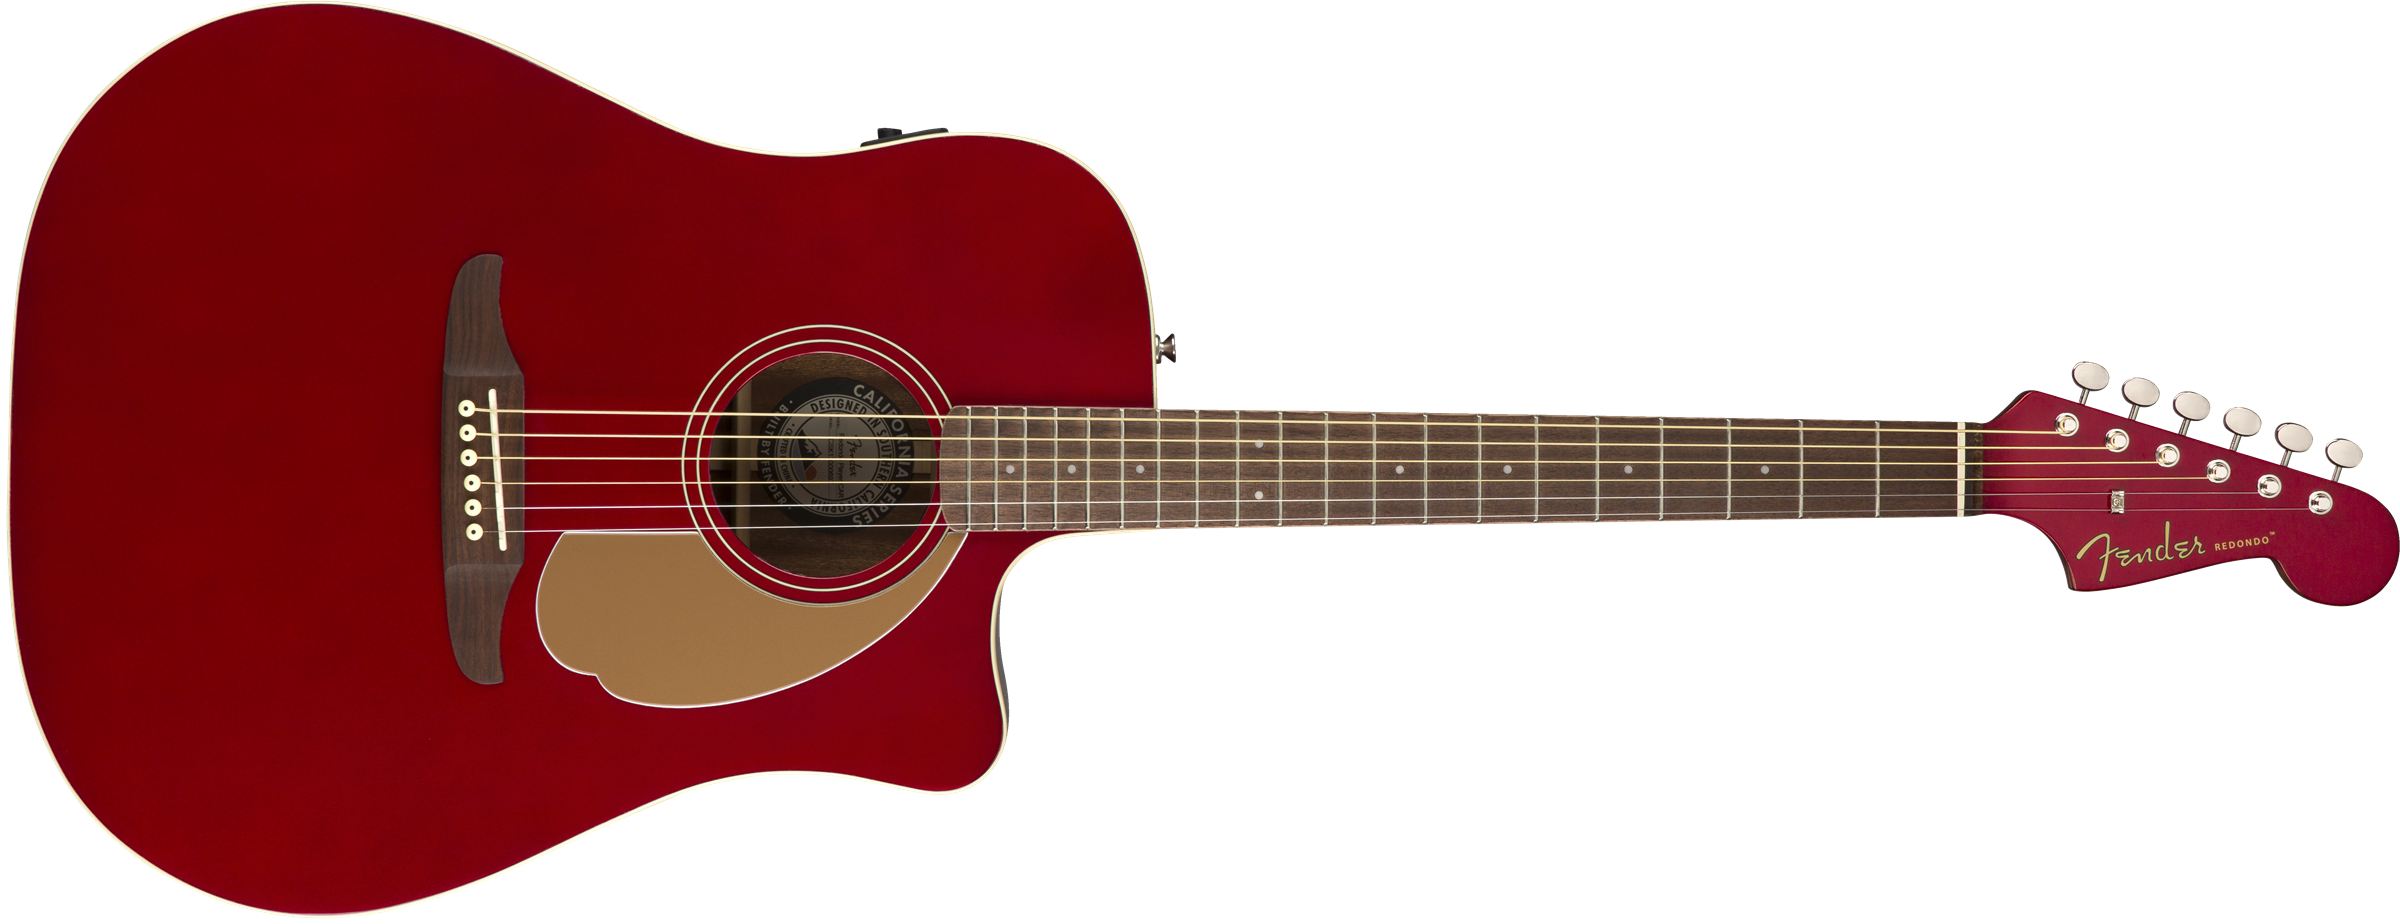 Fender Redondo Player - Candy Apple Red - Guitarra acústica & electro - Variation 1